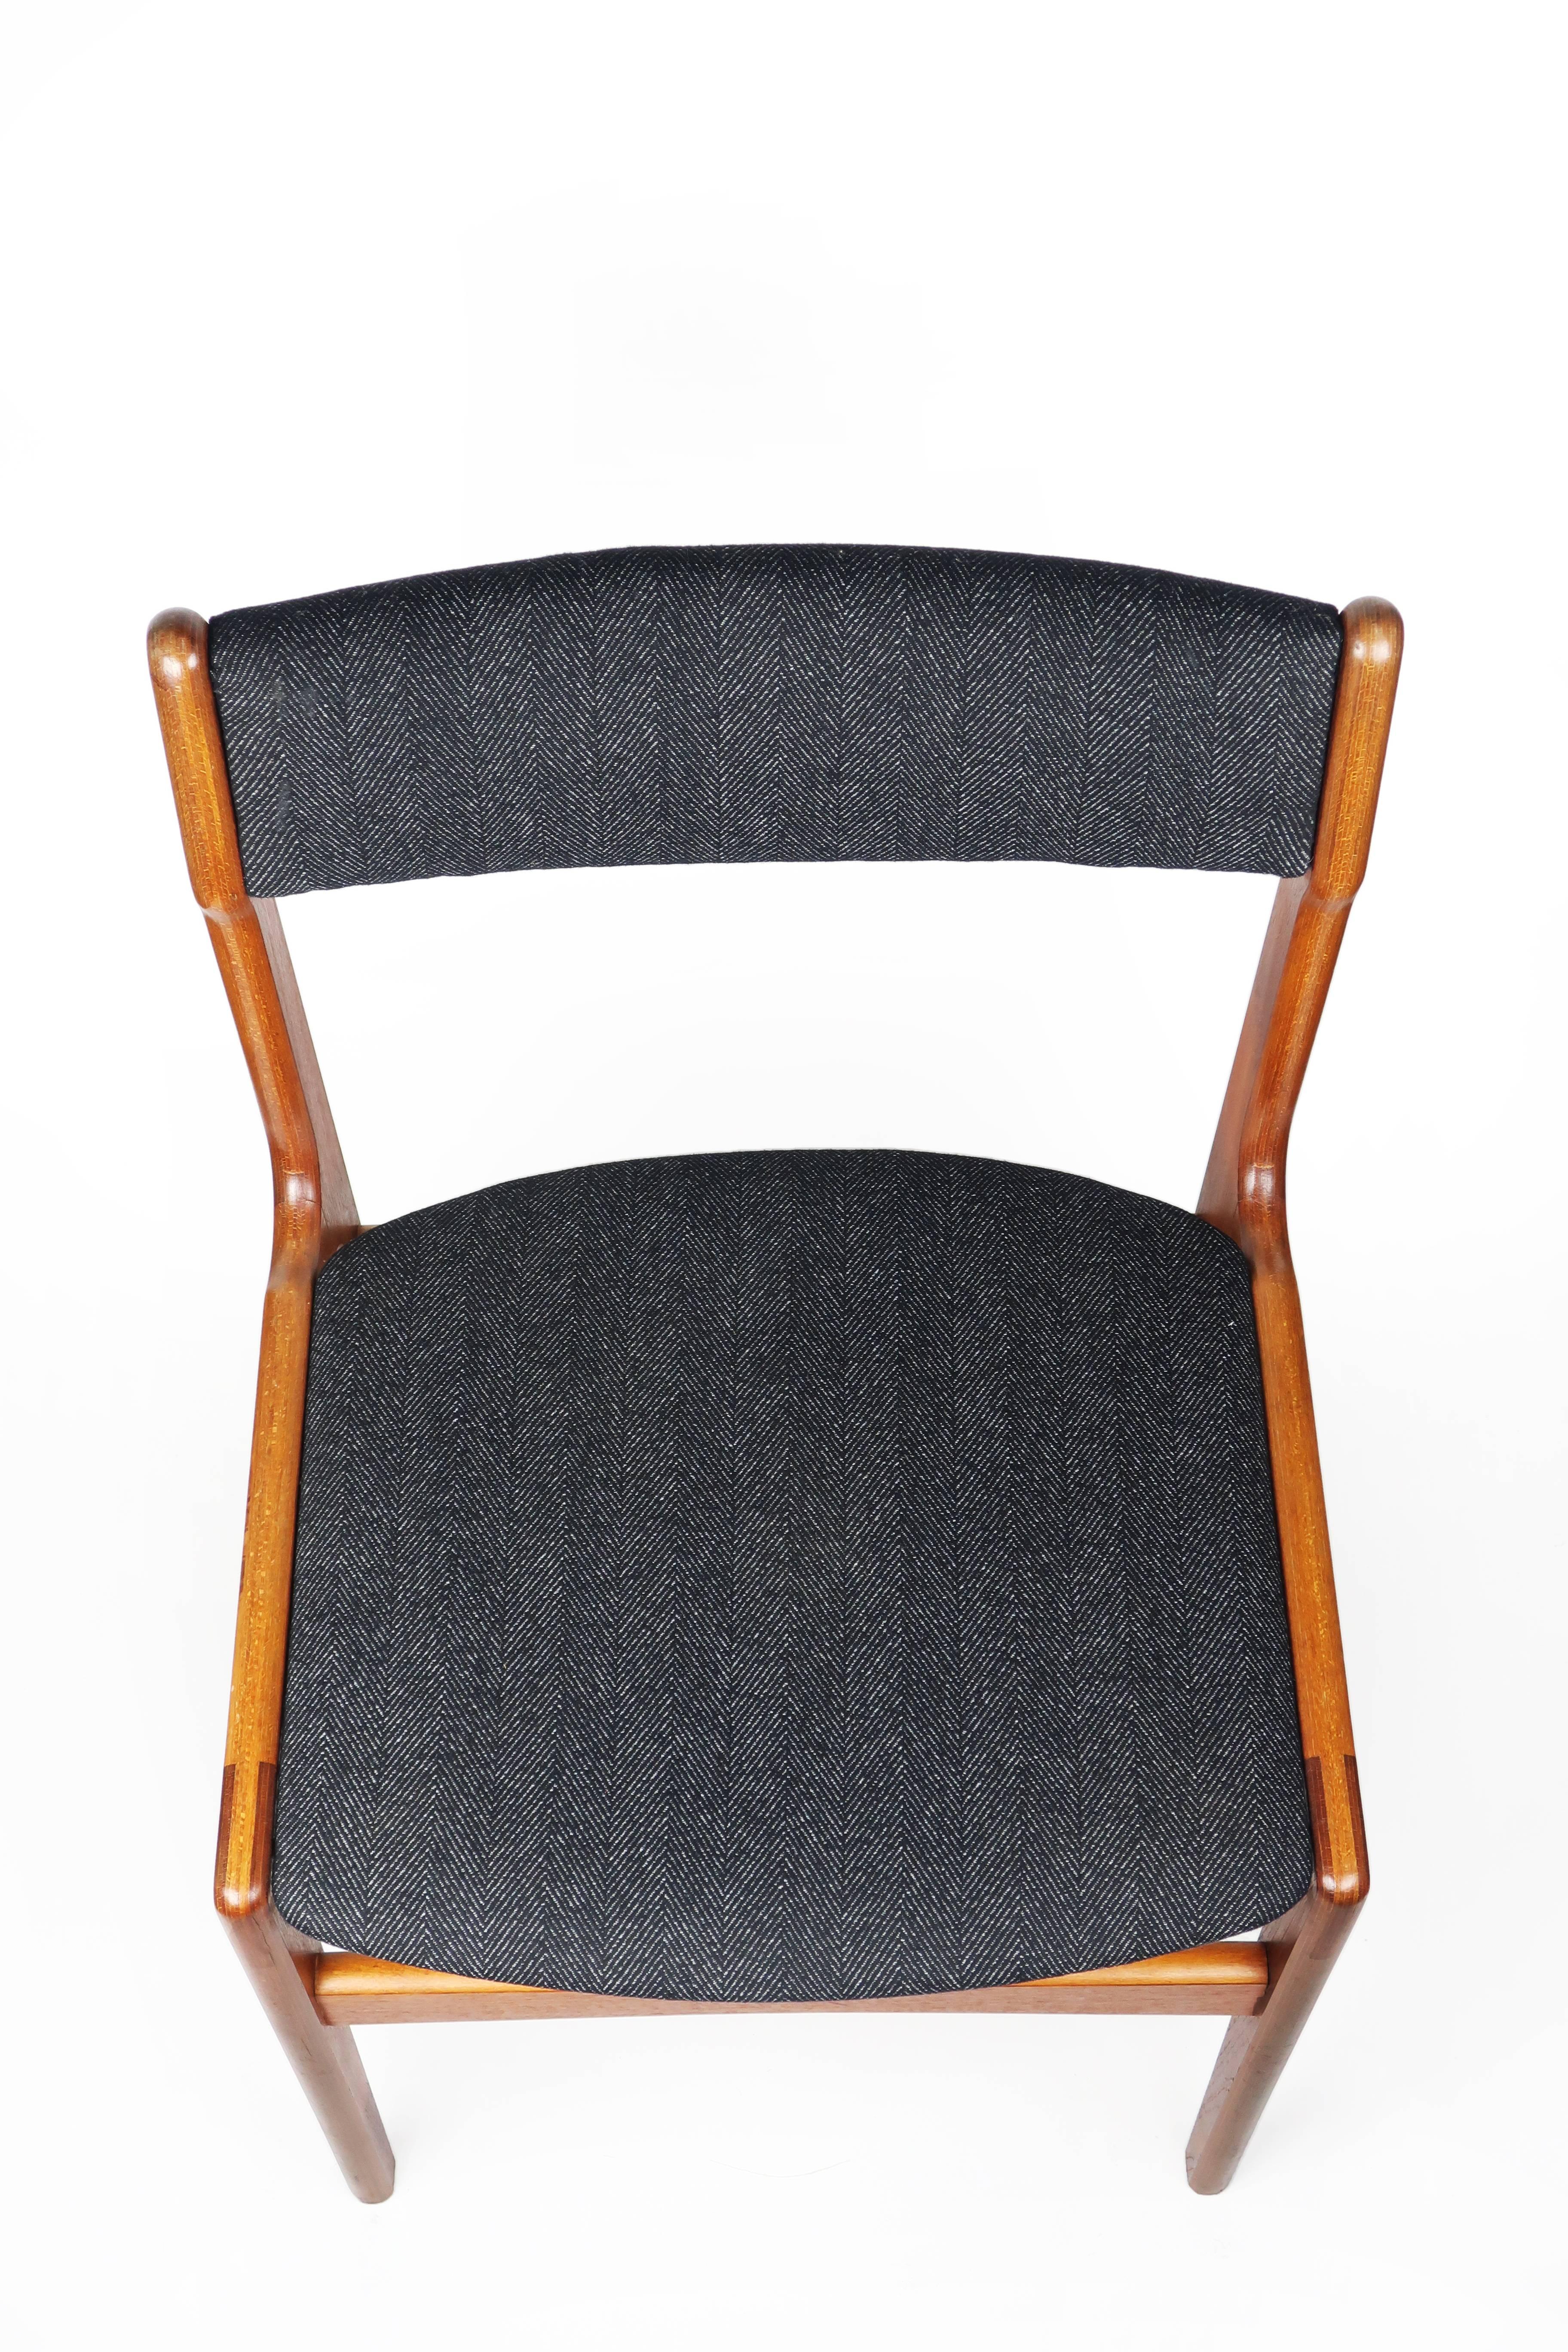 Teak Set of Six of Danish Modern Dining Chairs, Erik Buch for Anderstrup Møbelfabrik